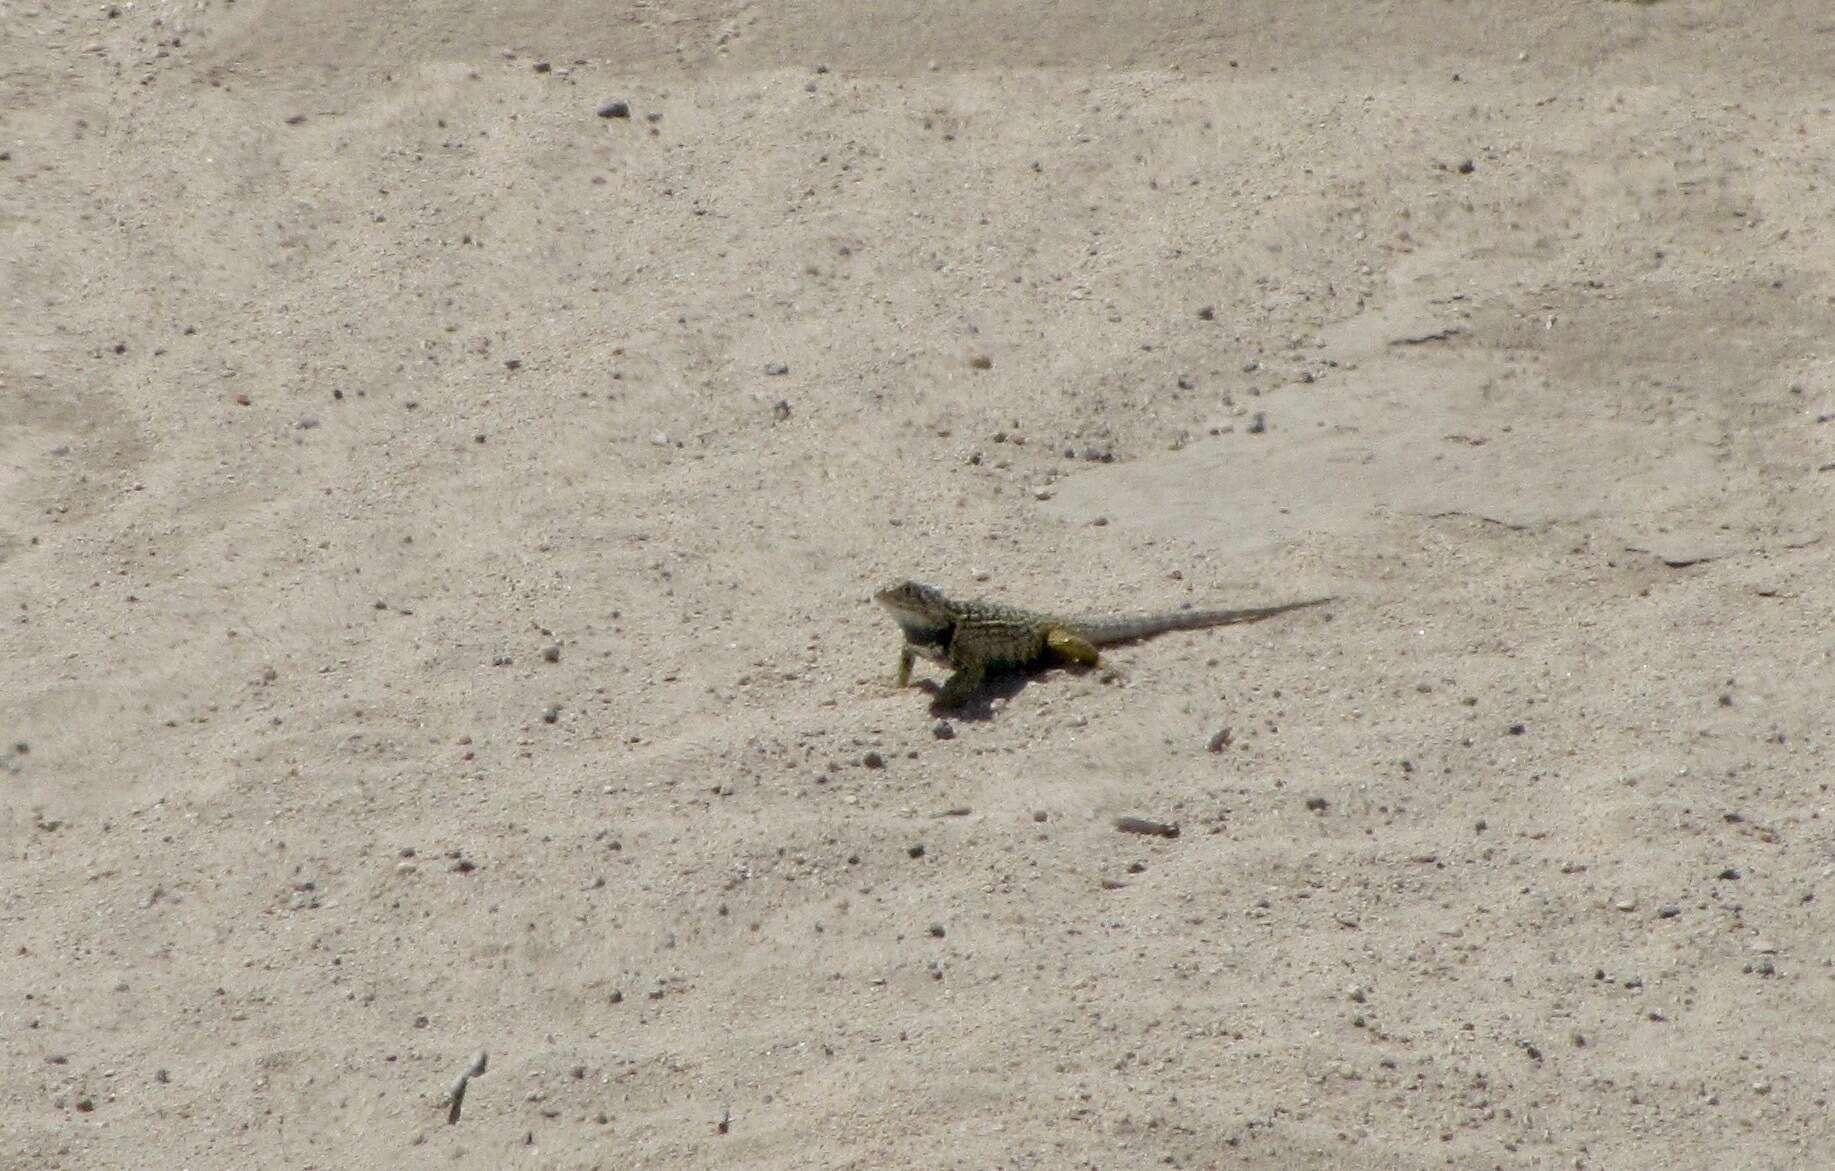 Image of Baja California Spiny Lizard